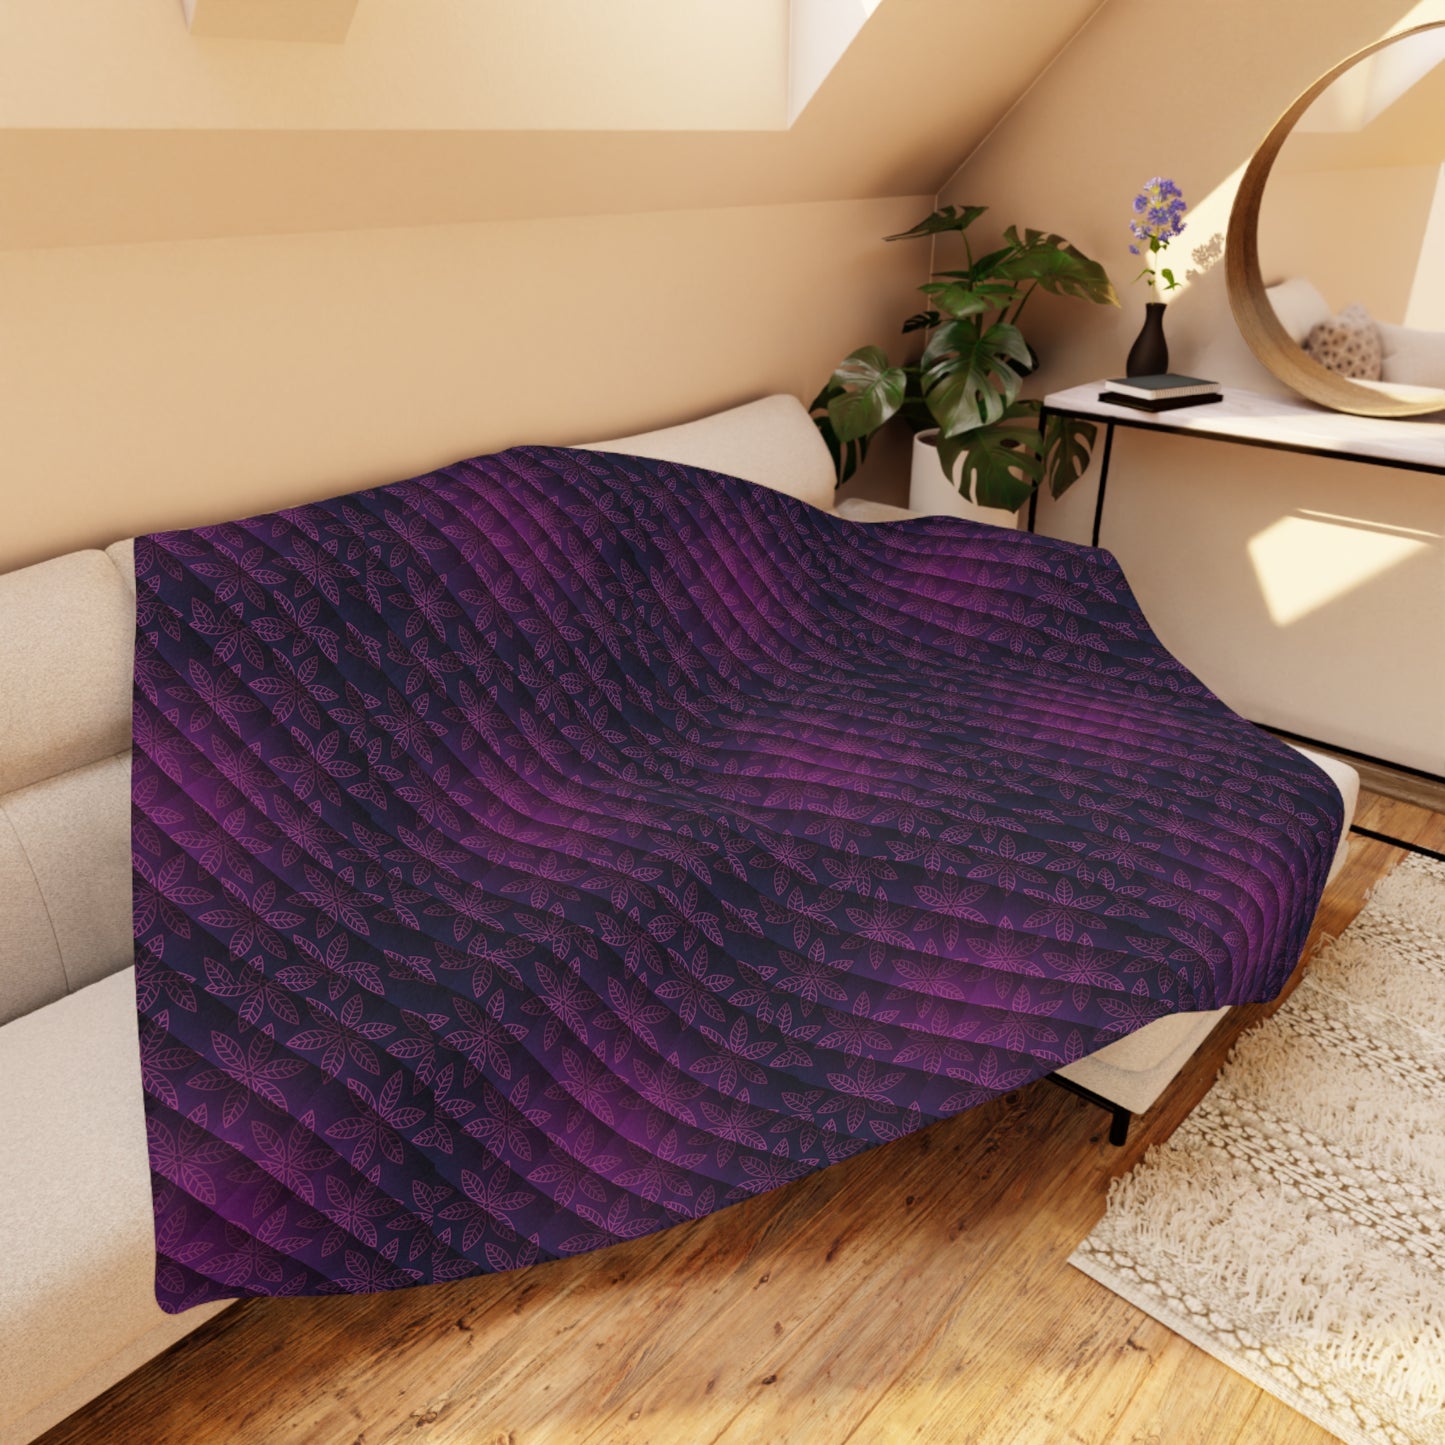 Niccie's Luxurious Purple Floral Pattern Tan Sherpa Blanket - Cozy Elegance for Every Season